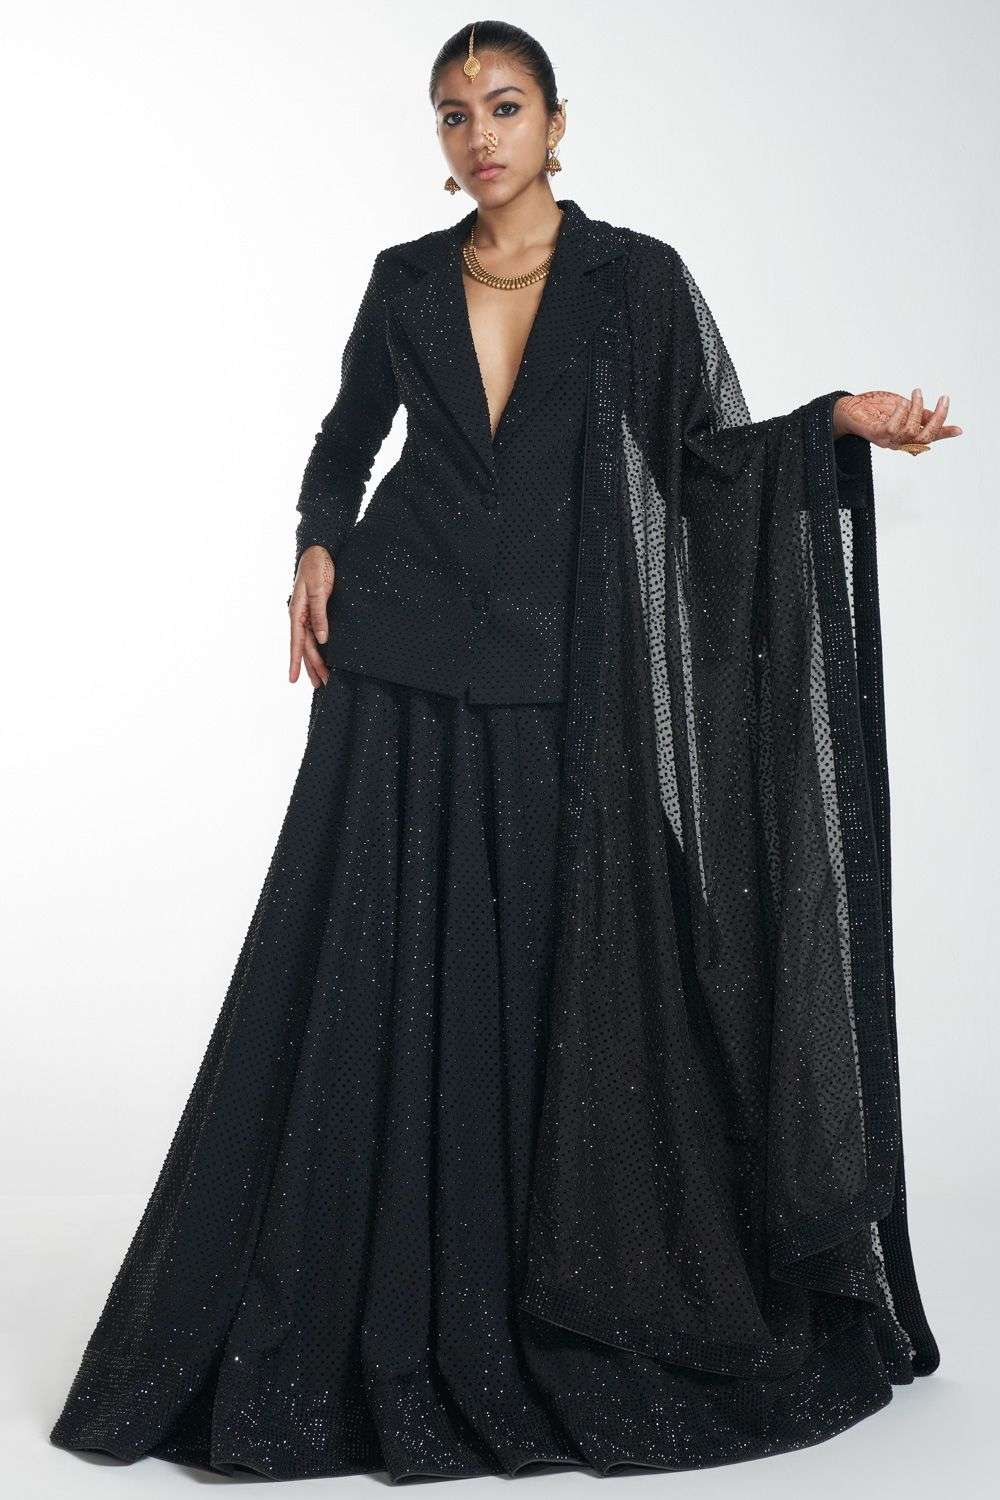 Black Satin Women's Long Jacket Dress Suits Formal Ladies Prom Evening Wear  Coat | eBay